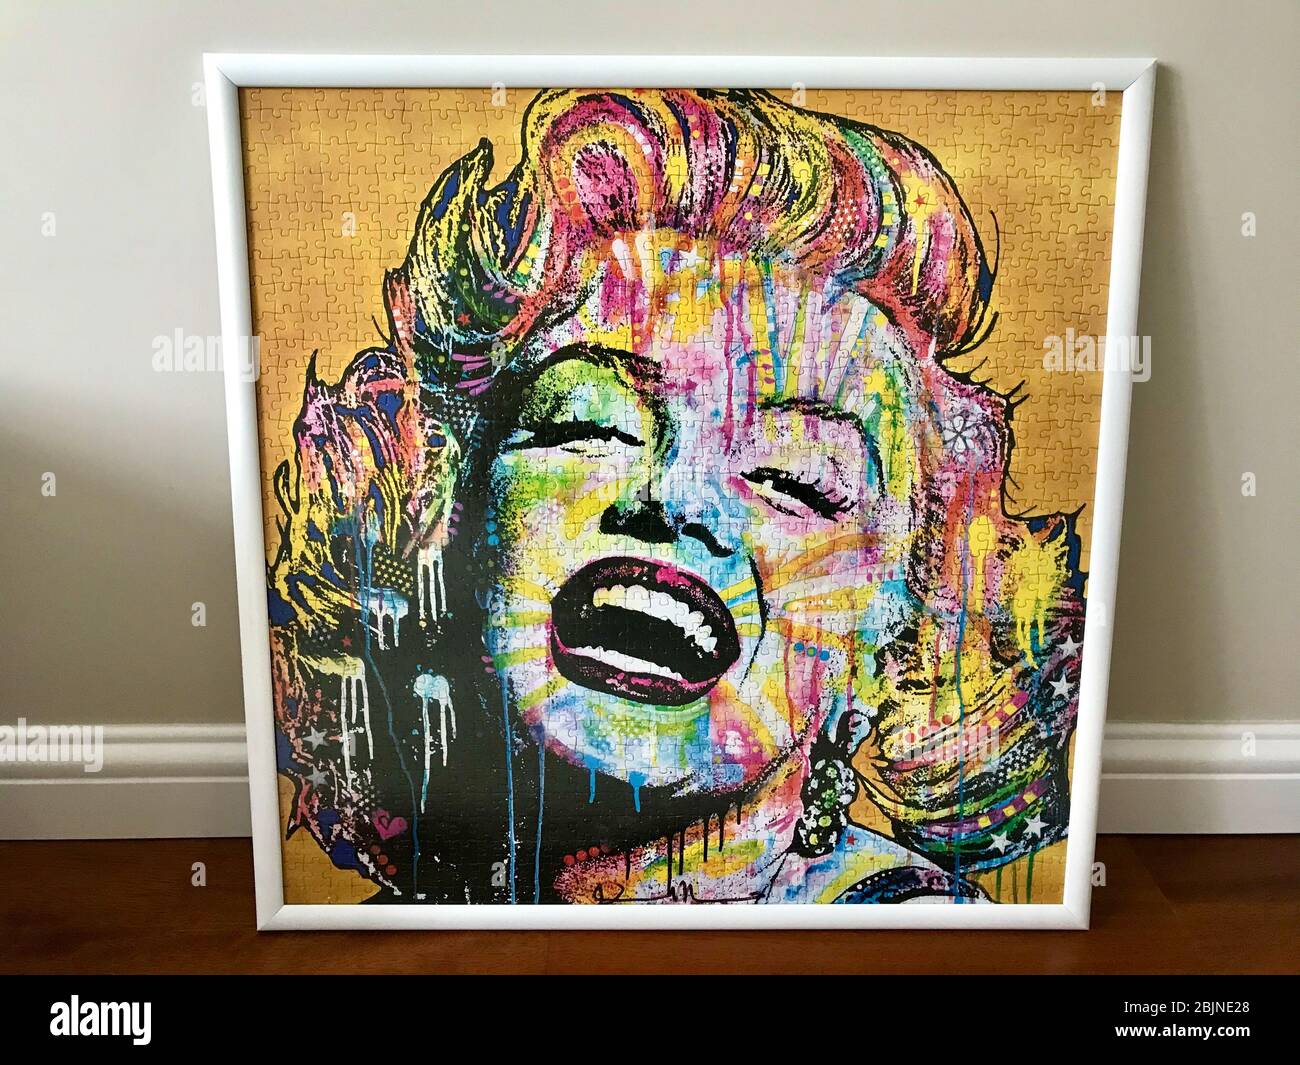 Marilyn monroe pop art -Fotos und -Bildmaterial in hoher Auflösung – Alamy